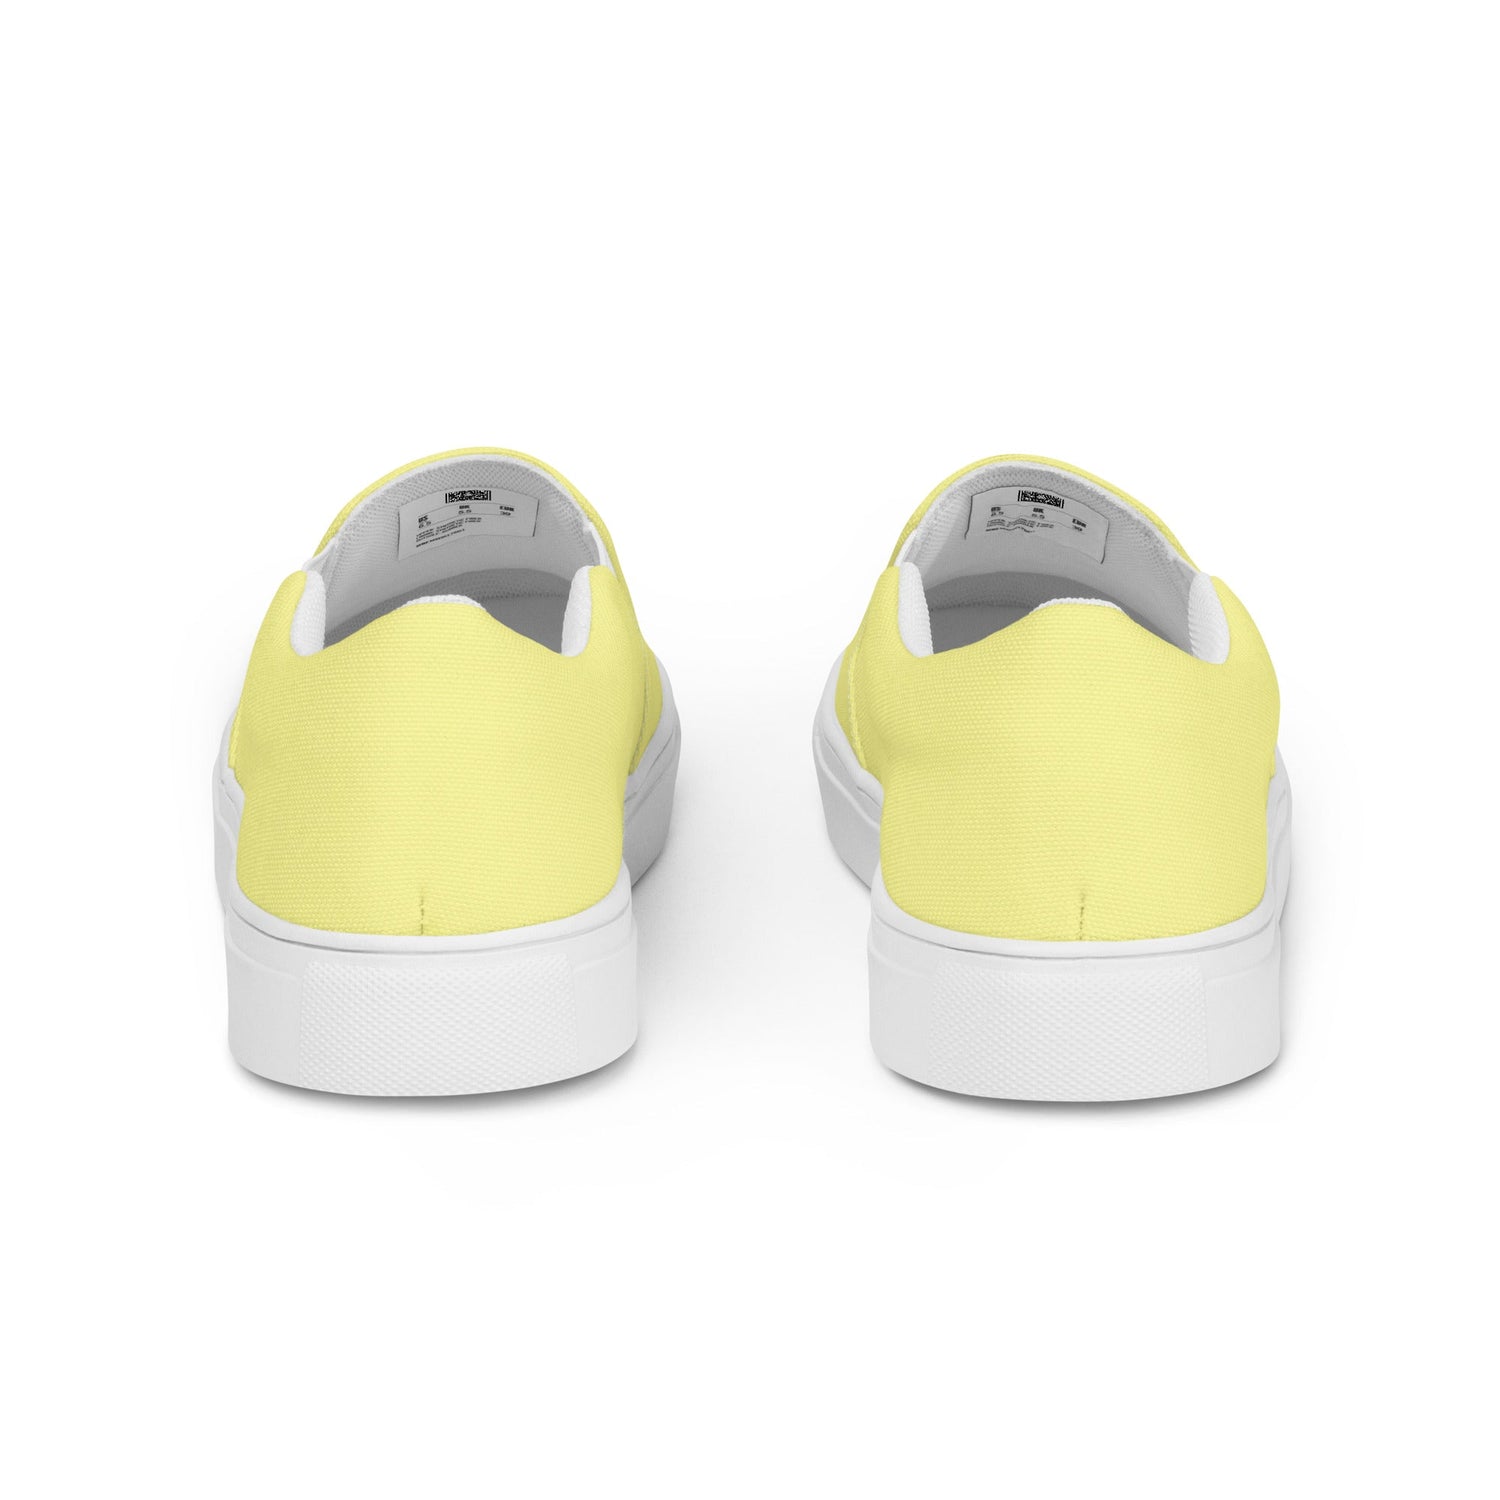 klasneakers Women’s slip-on canvas shoes - Lemon Yellow